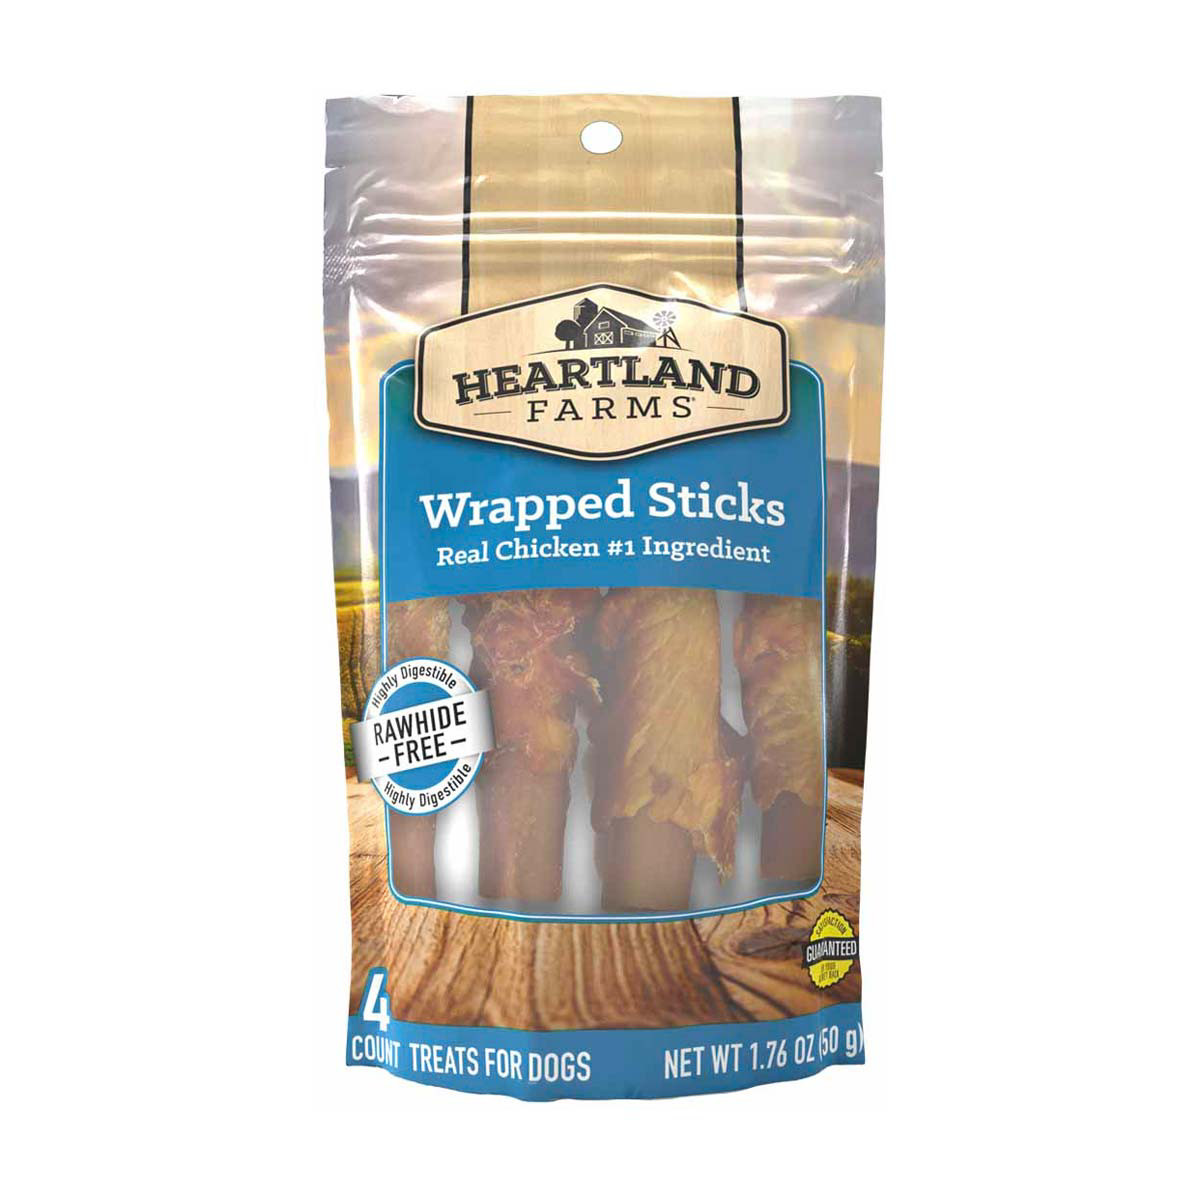 Heartland Farms Rawhide Free Chicken Wrapped Sticks, 4 Ct